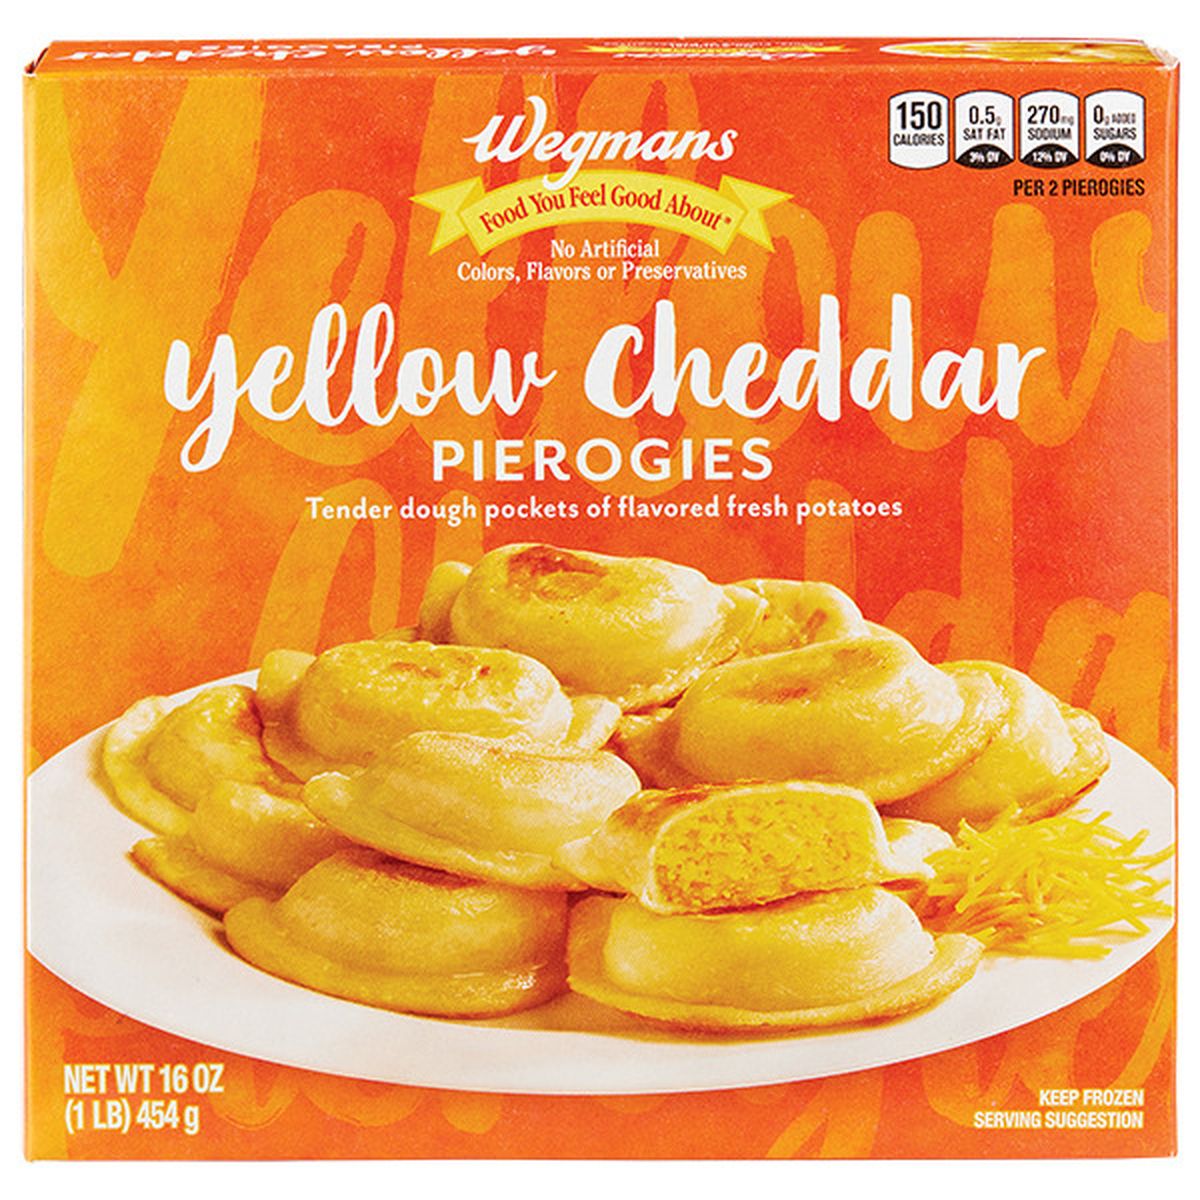 Calories in Wegmans Yellow Cheddar Pierogies